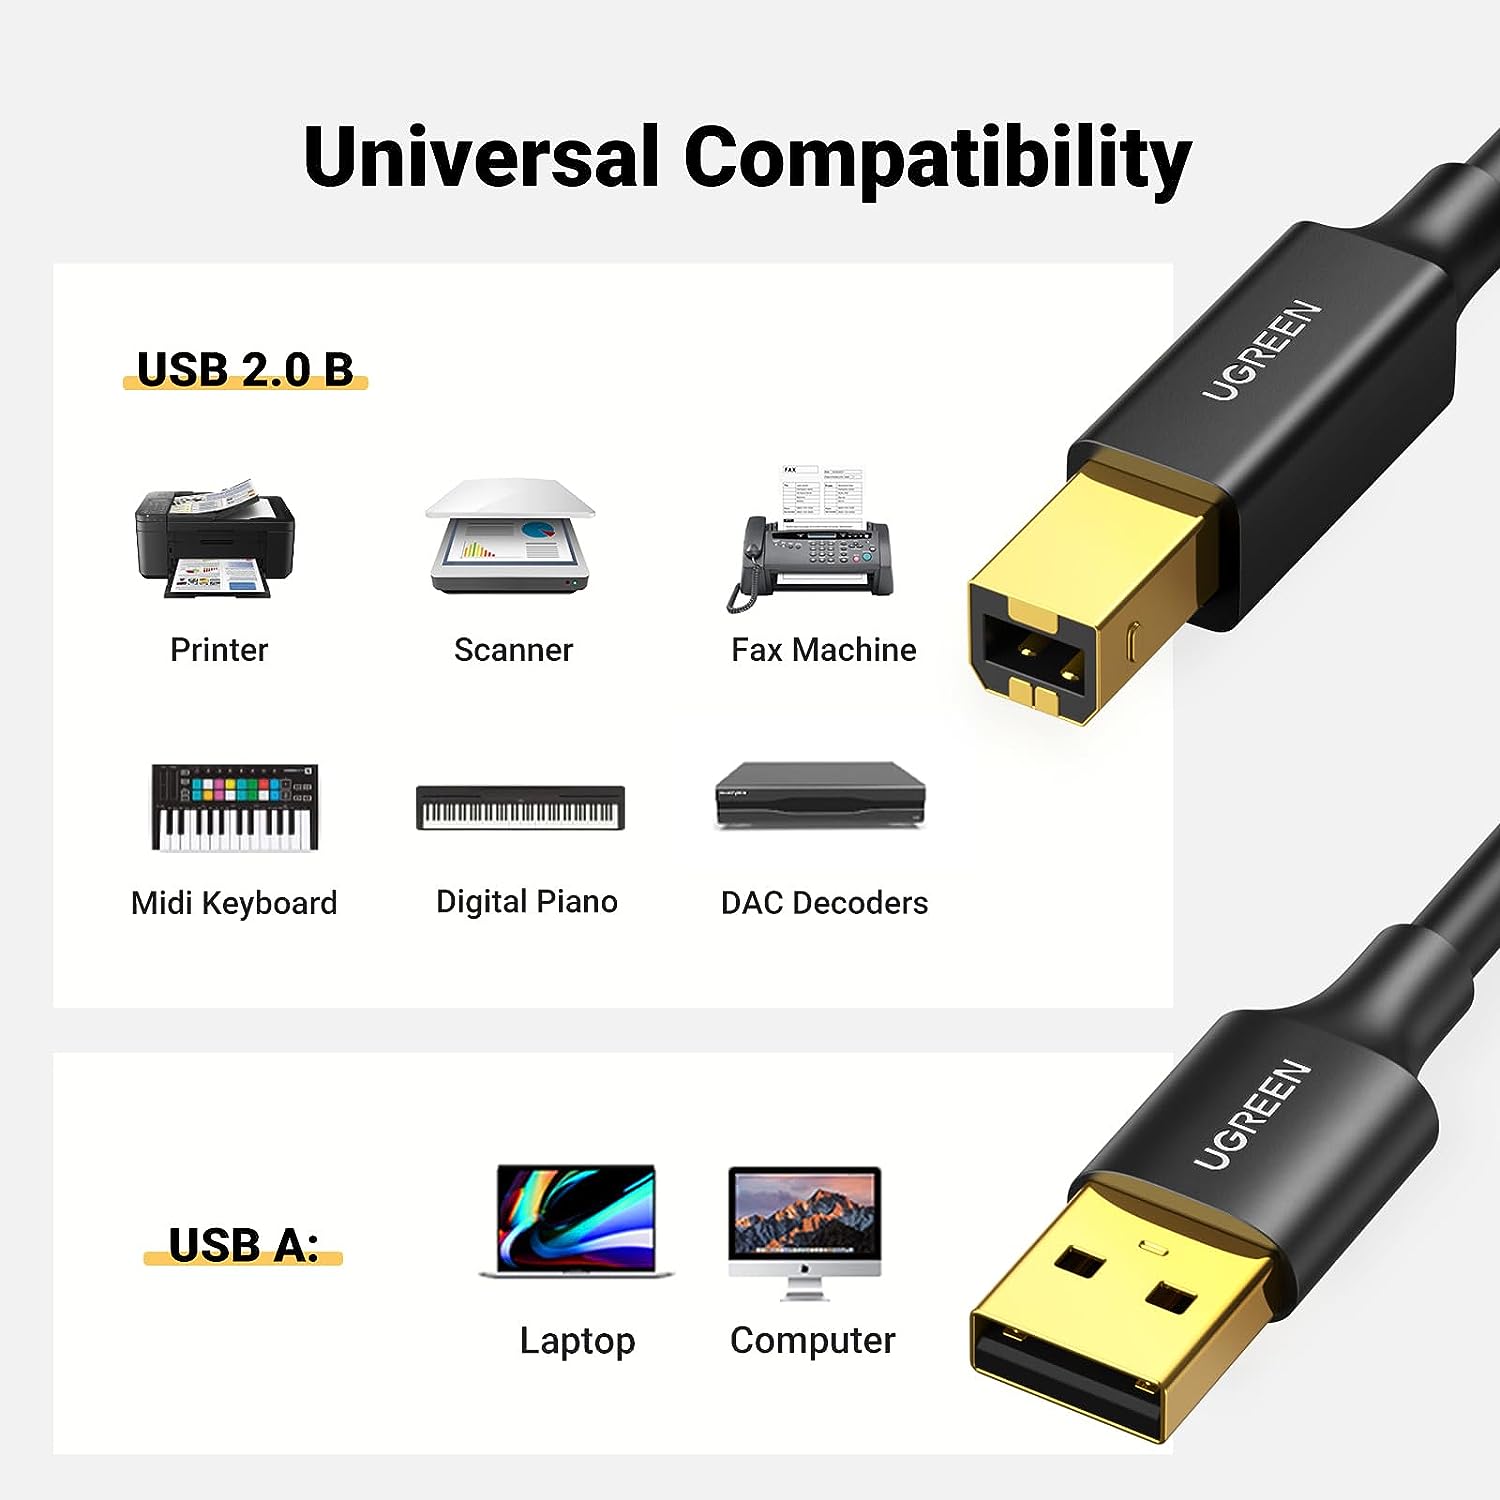 UGreen USB 2.0 Printer Cable 1.5M - Black